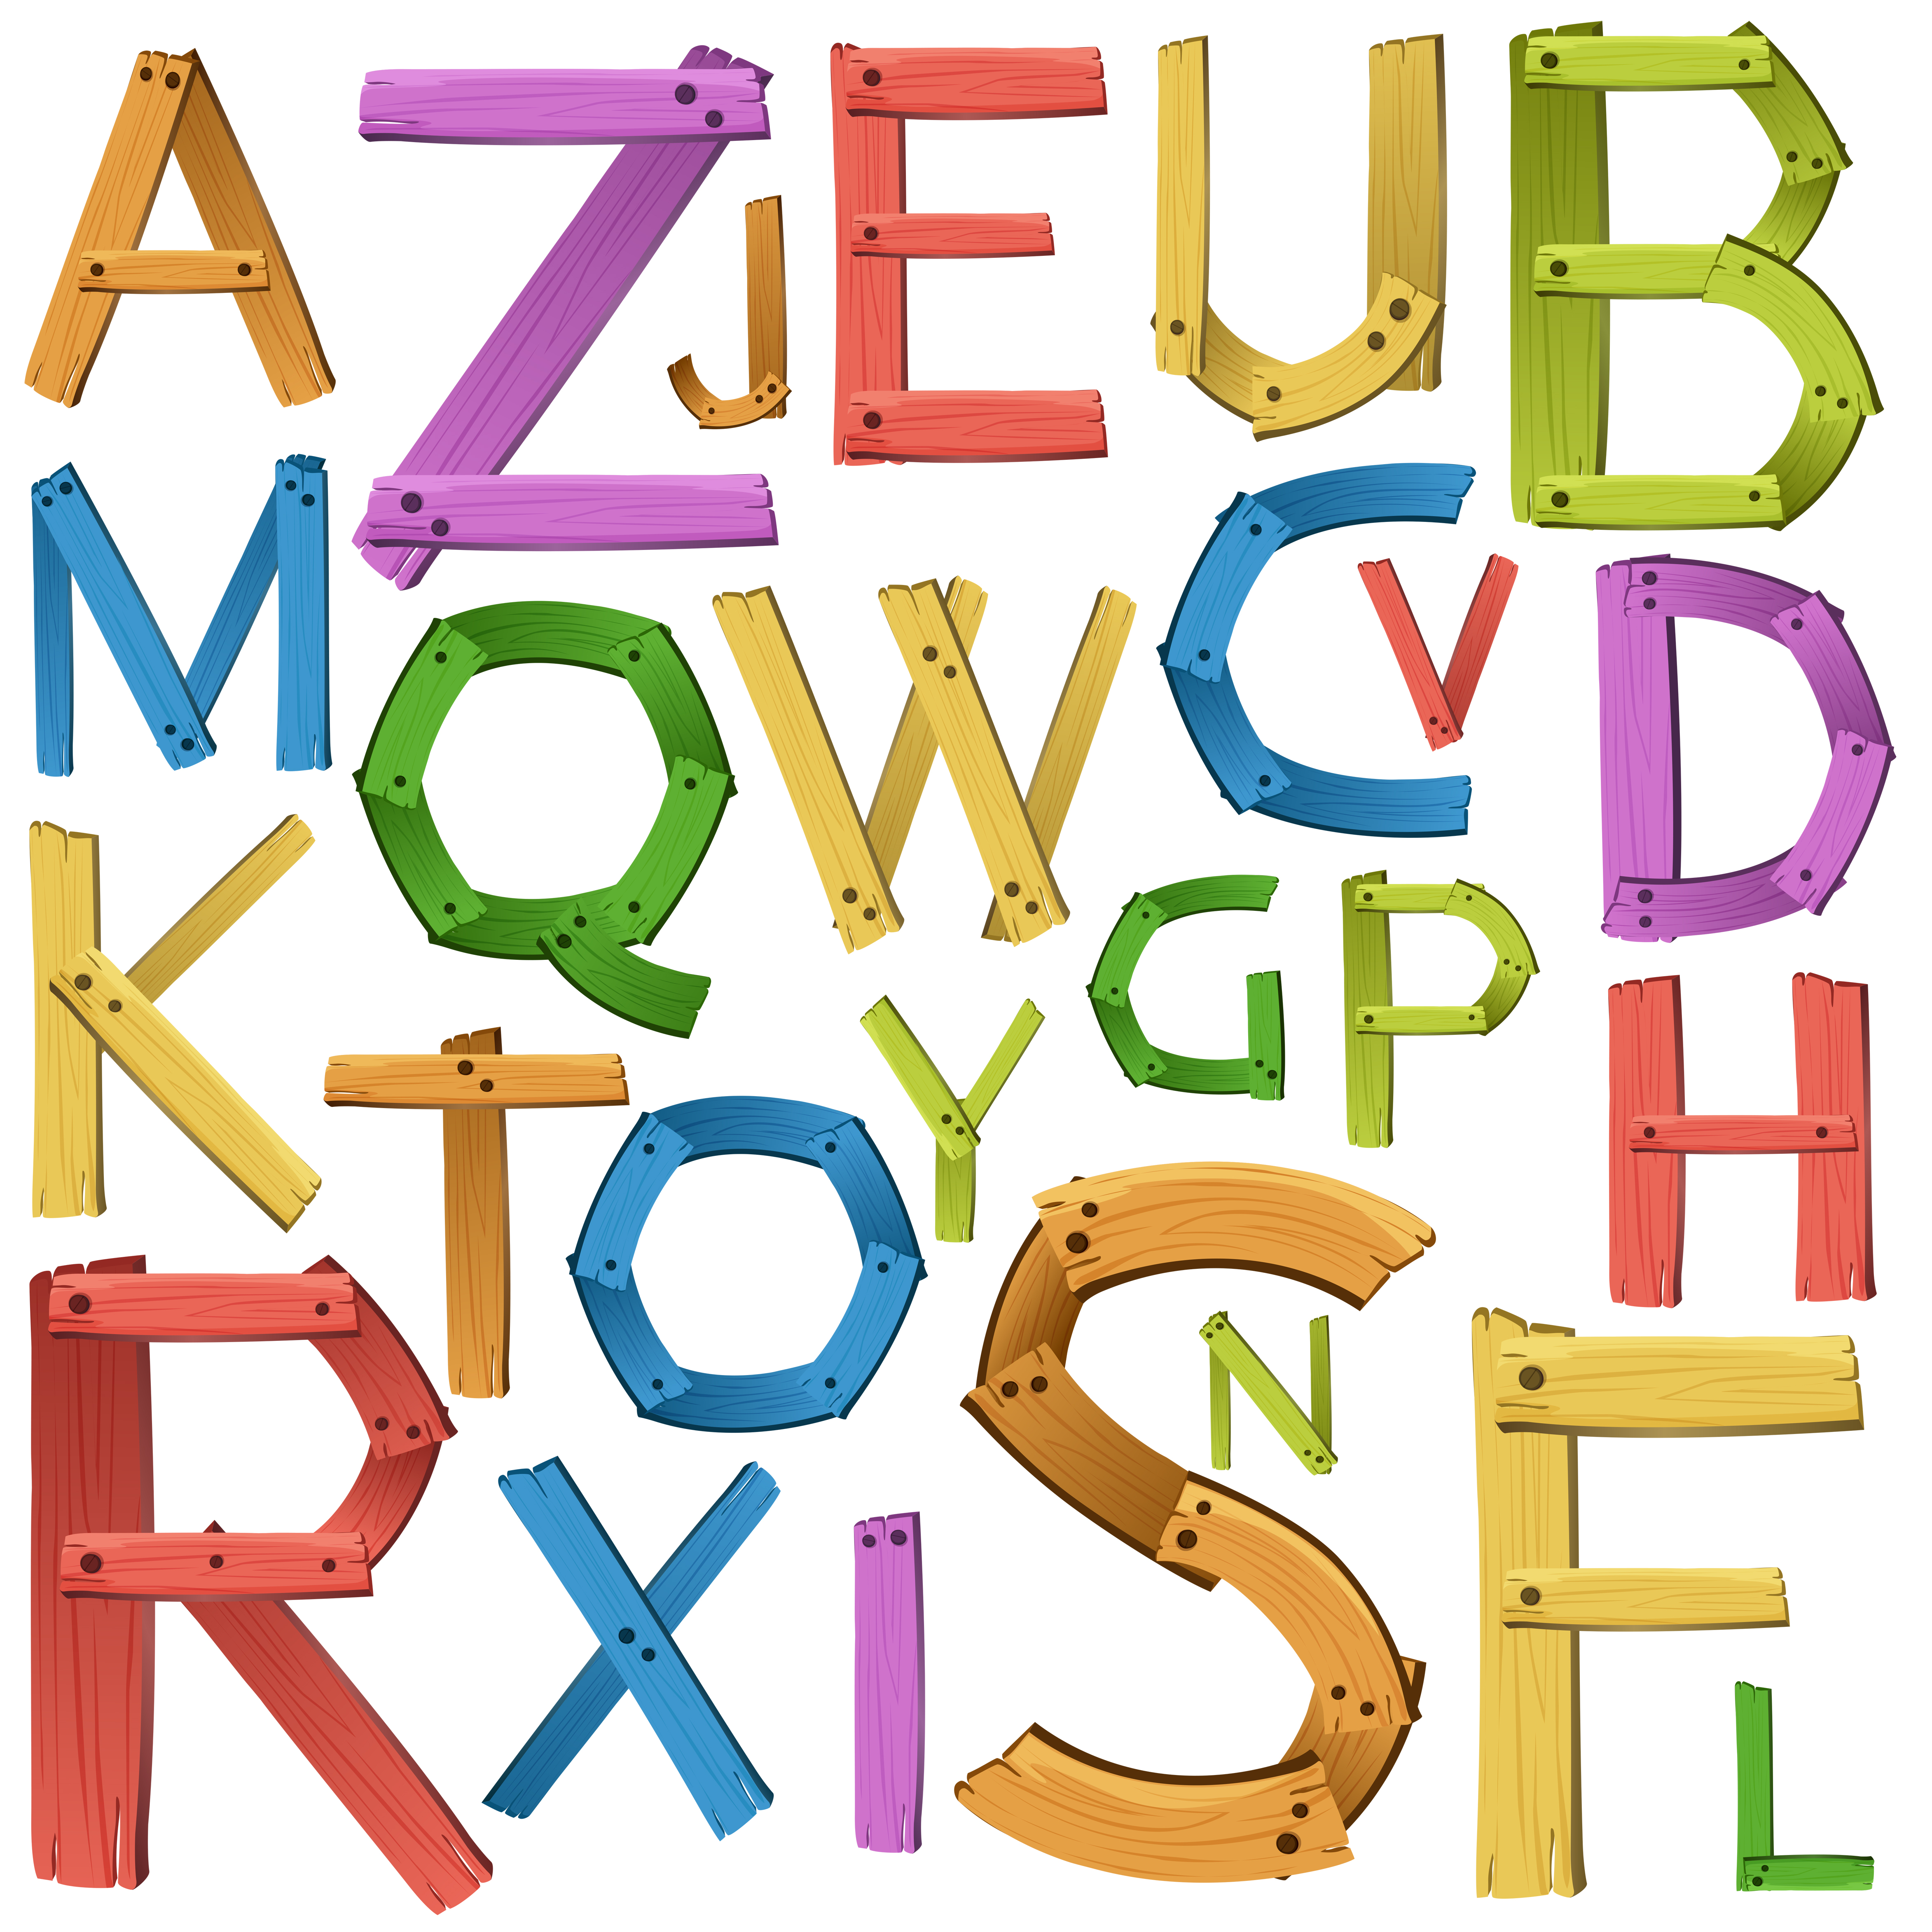 Font design of english alphabet - Download Free Vector Art ...